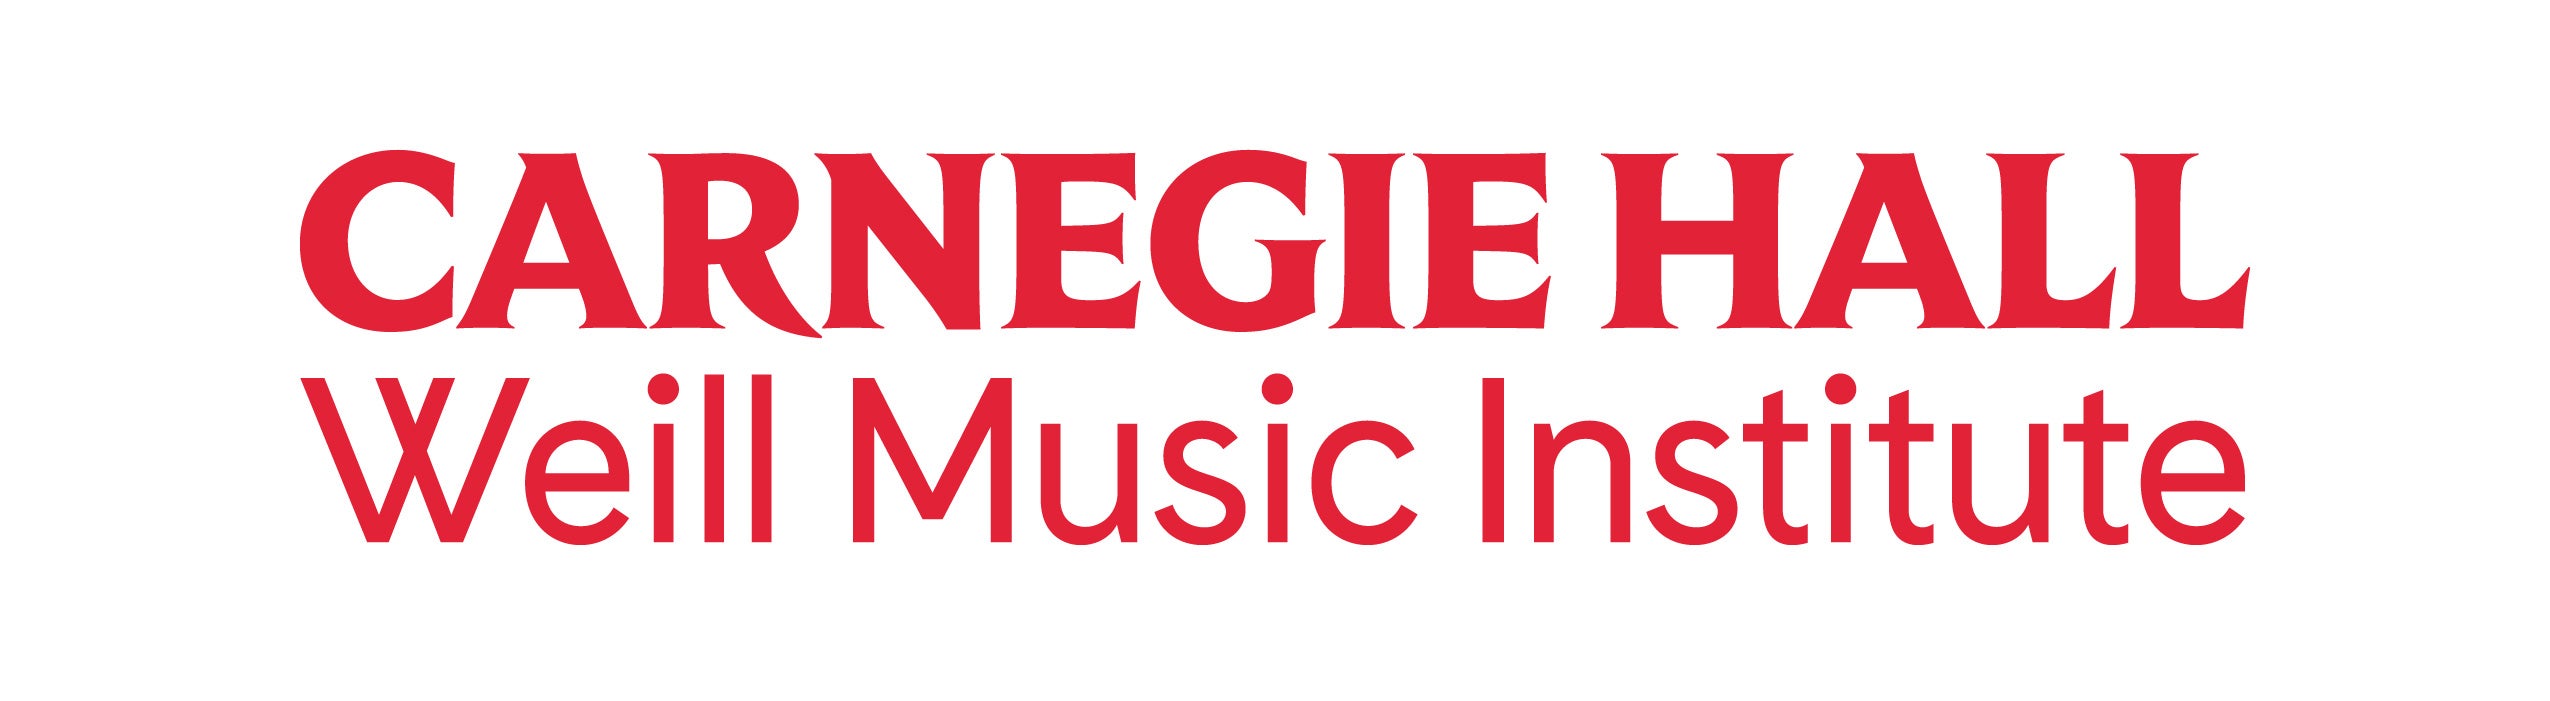 Carnegie Hall WMI Logo Red.jpg